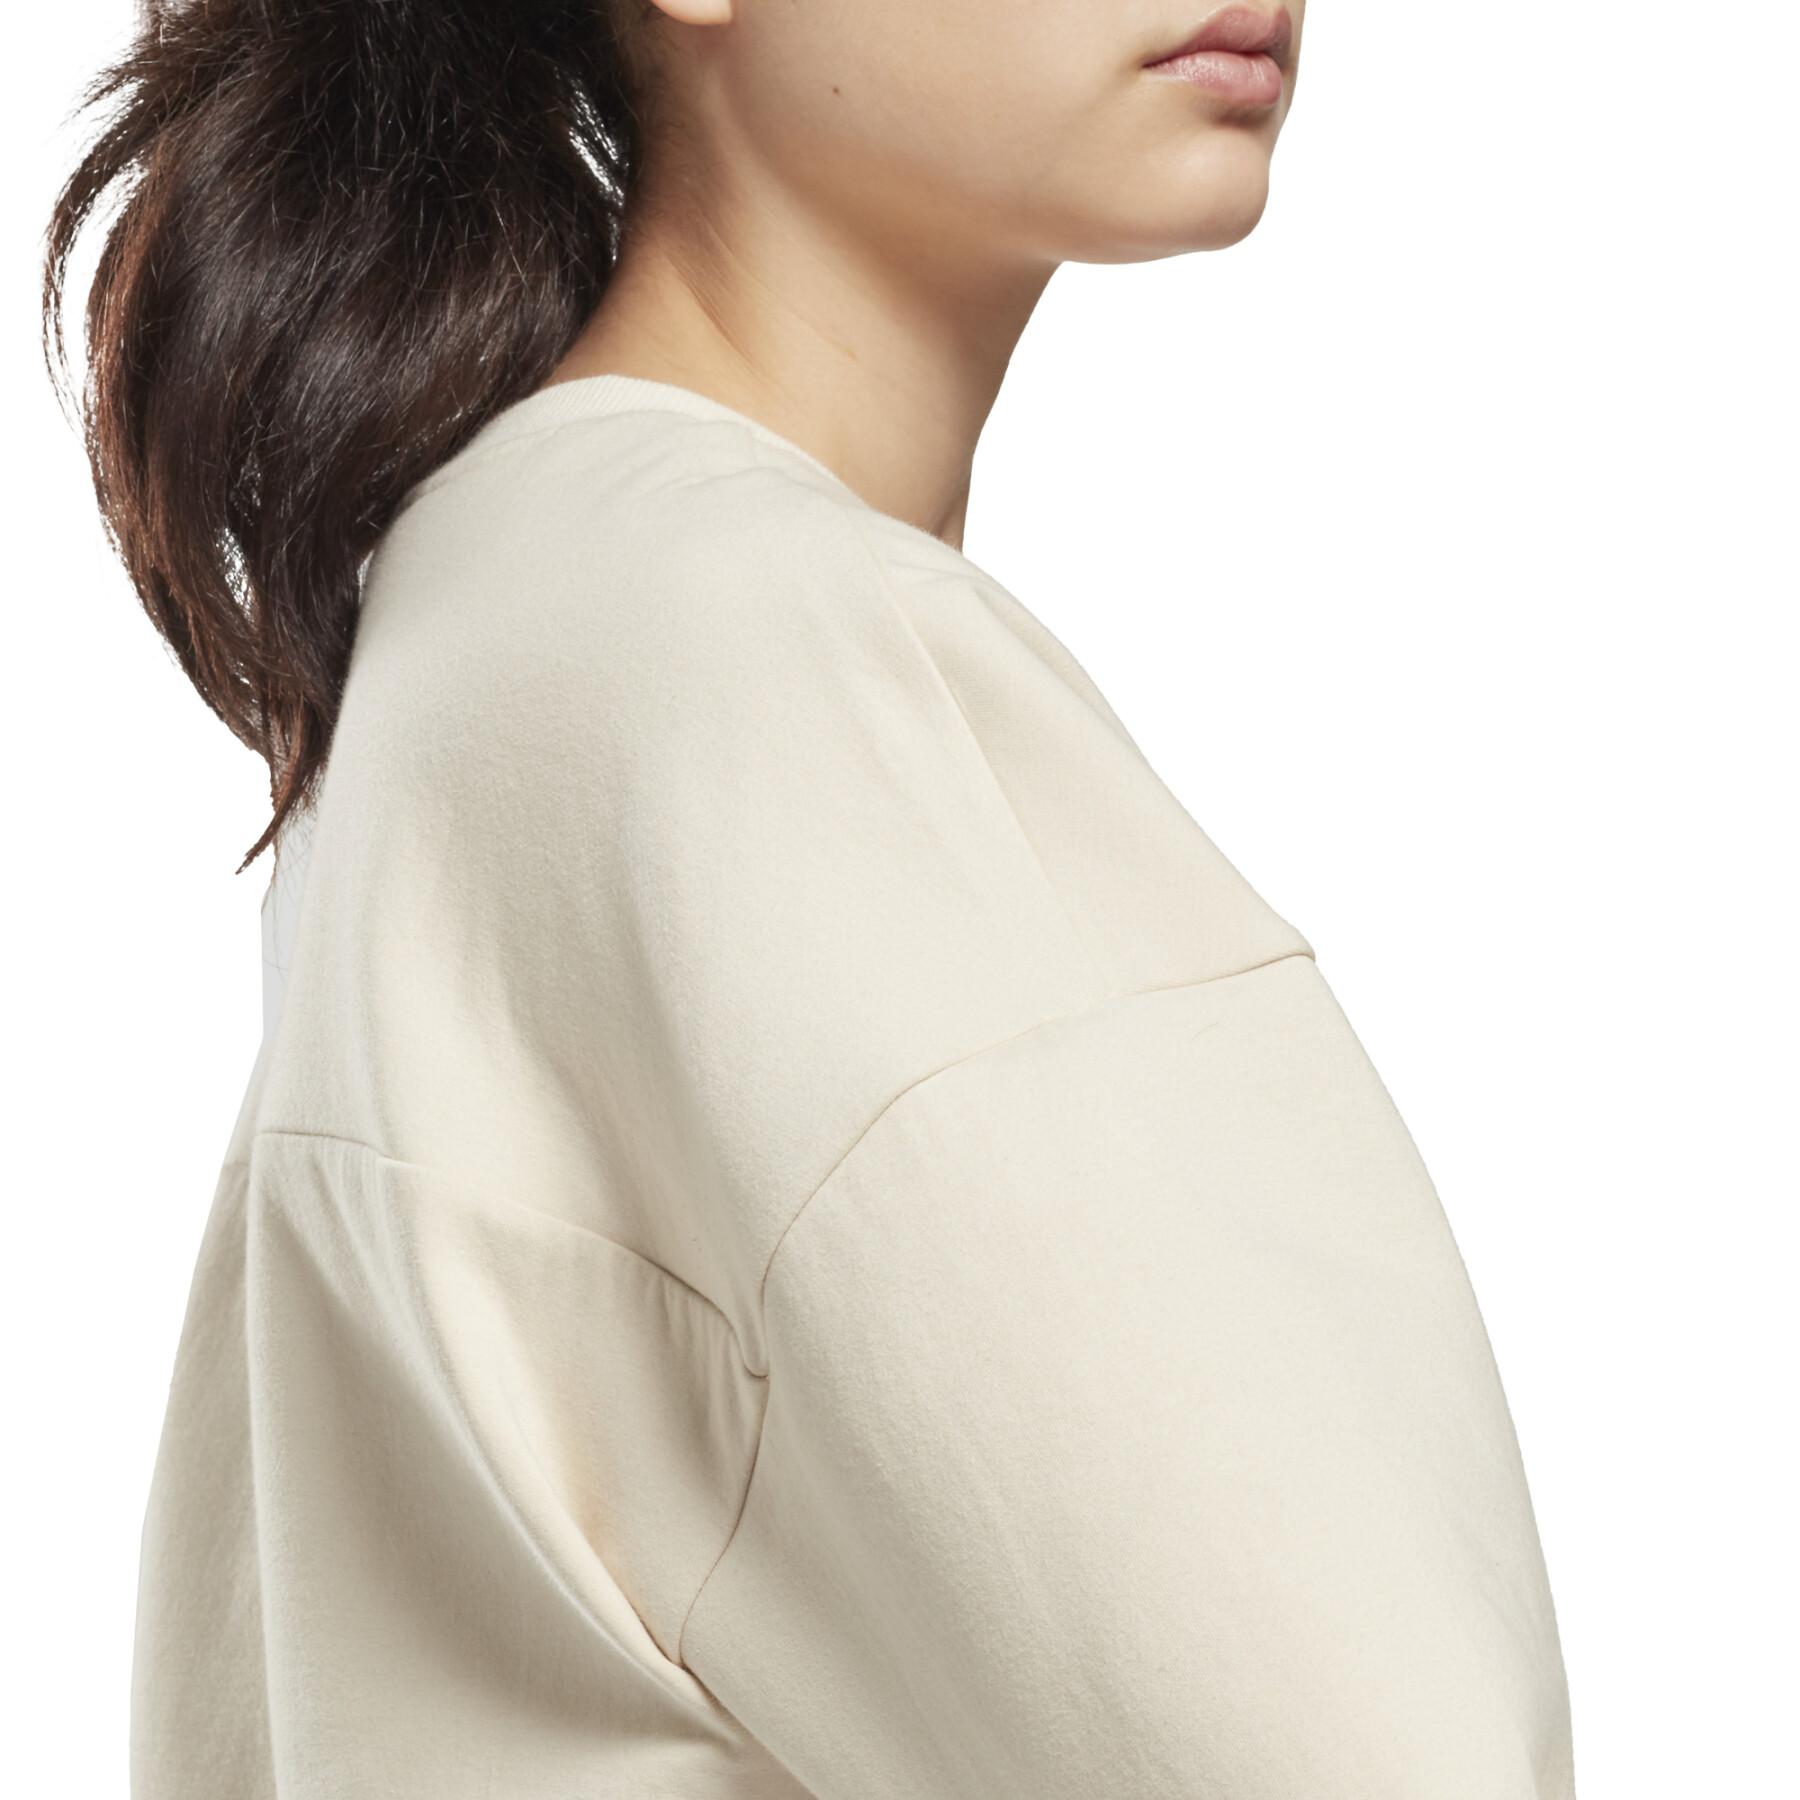 Lightweight cotton zip-up sweatshirt for women Reebok DreamBlend